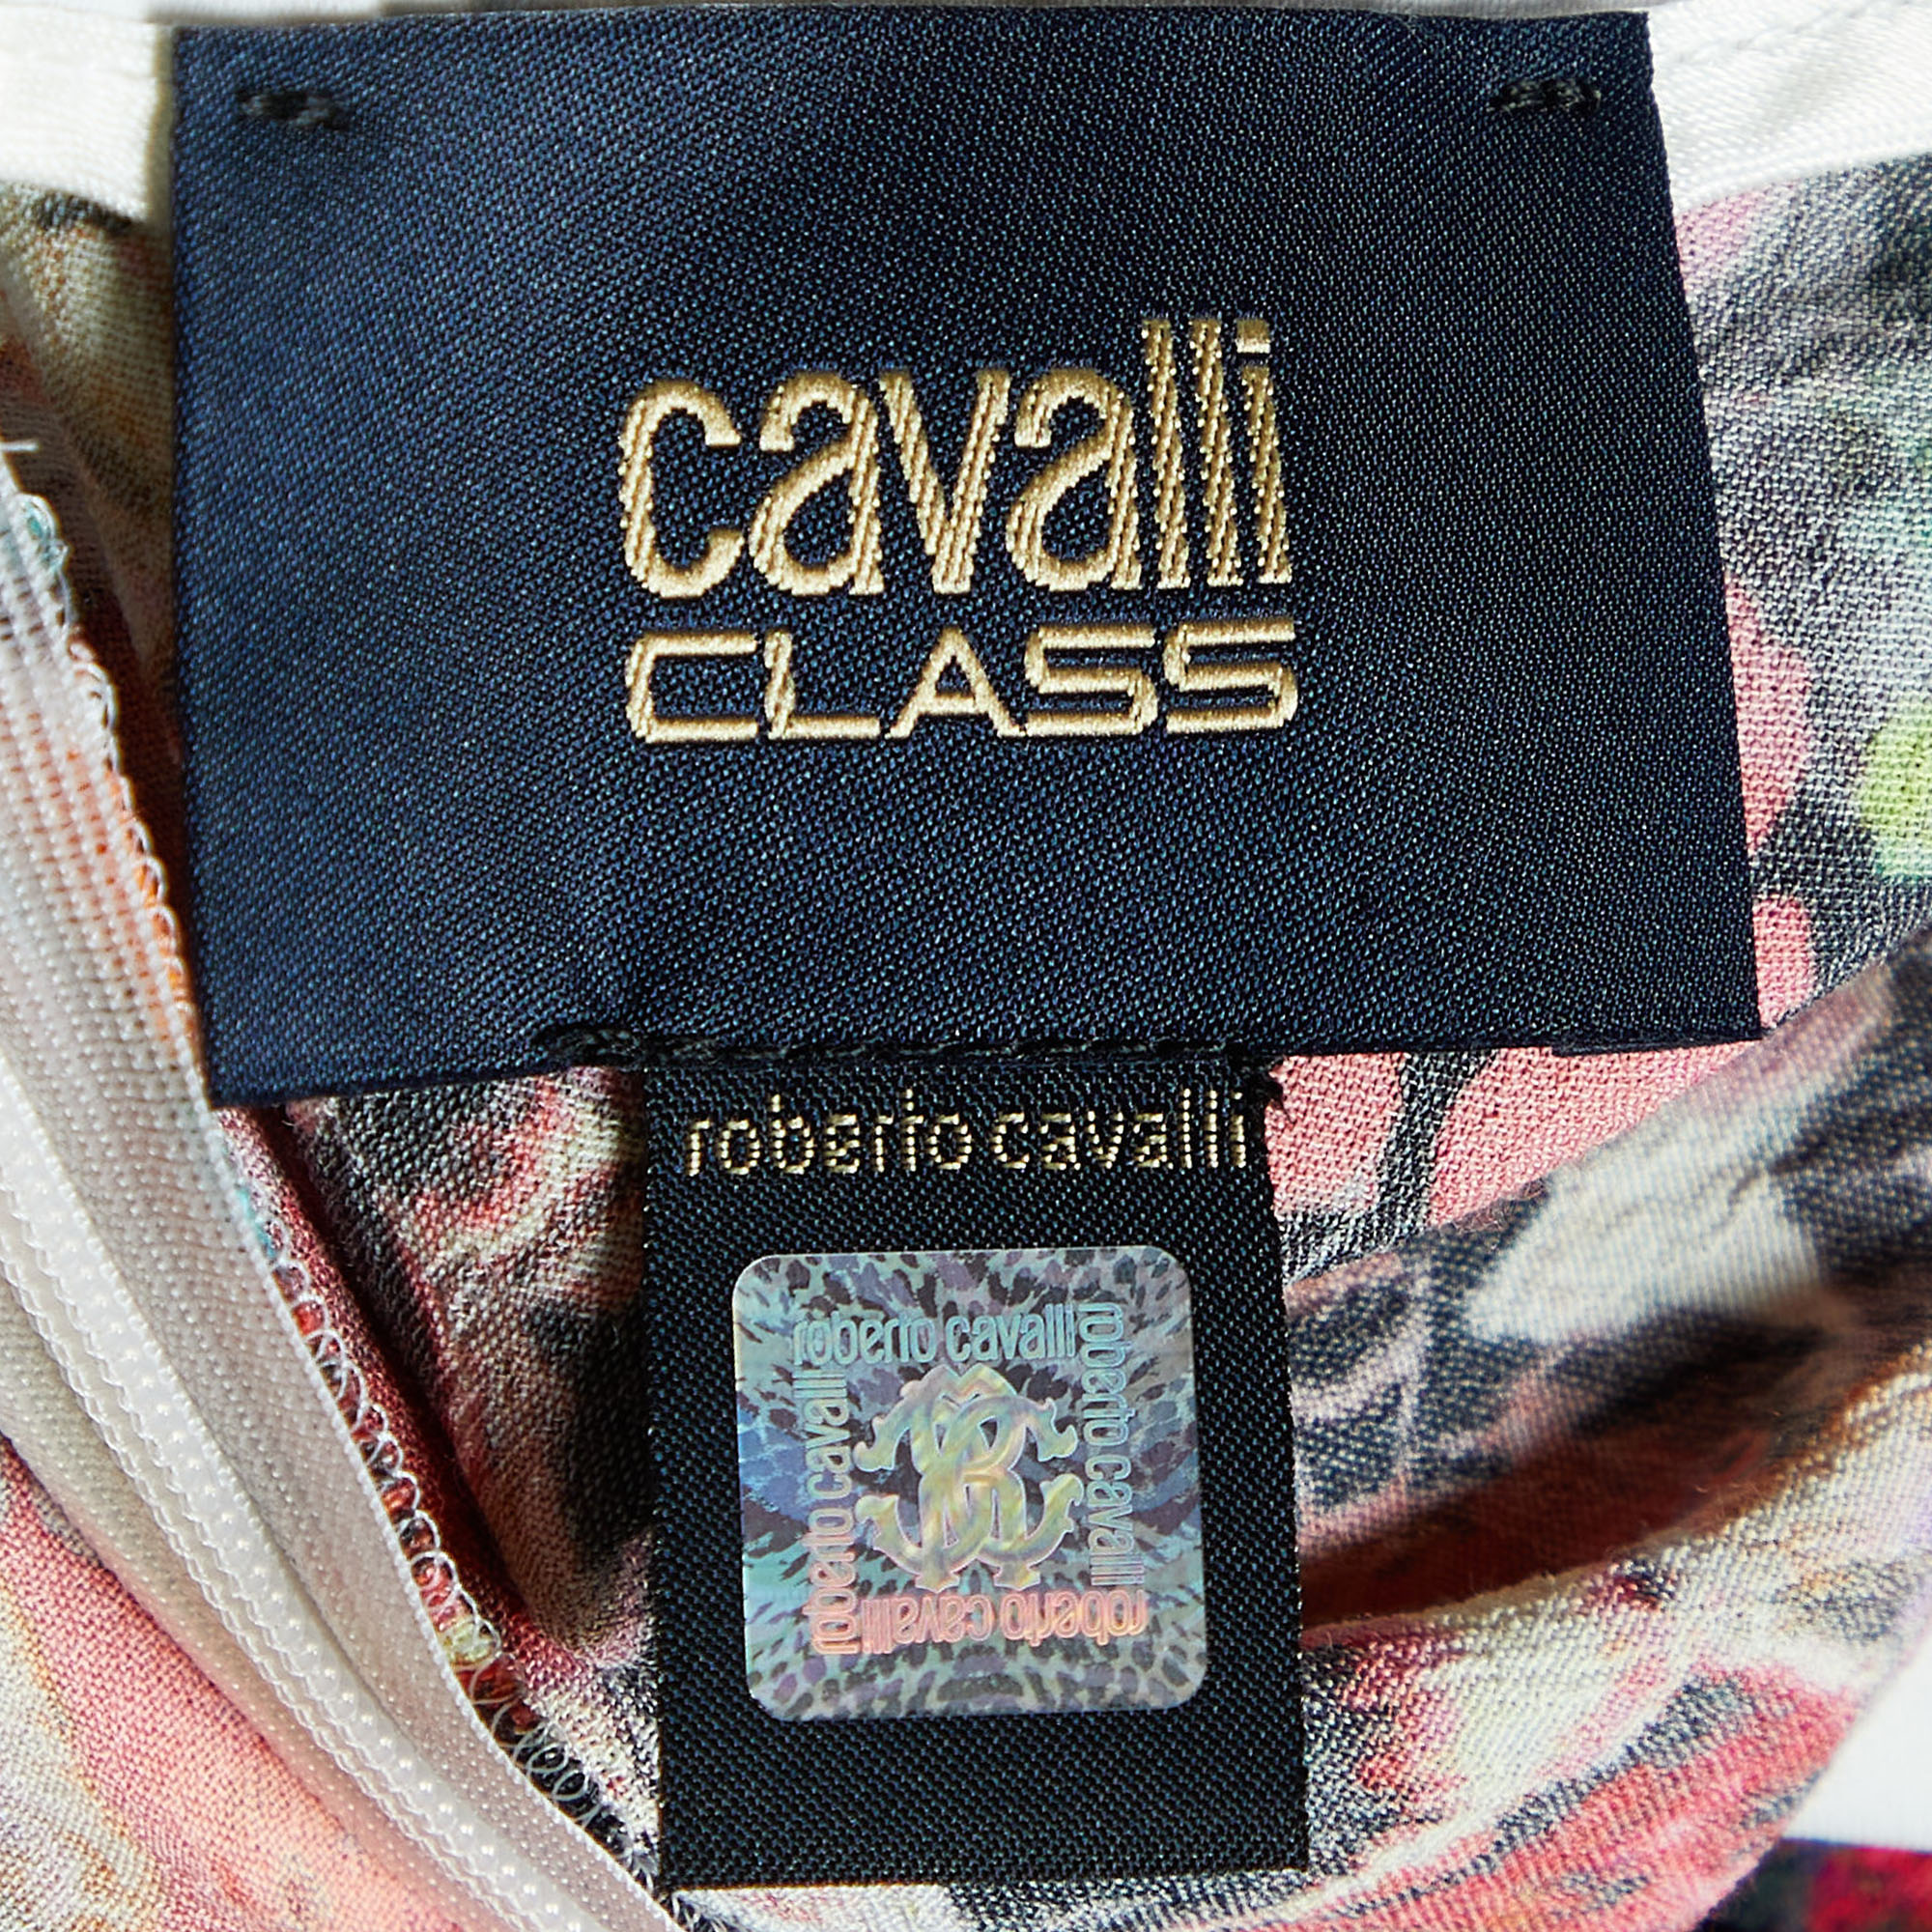 Cavalli Class White & Multicolor Printed Polyester Top L